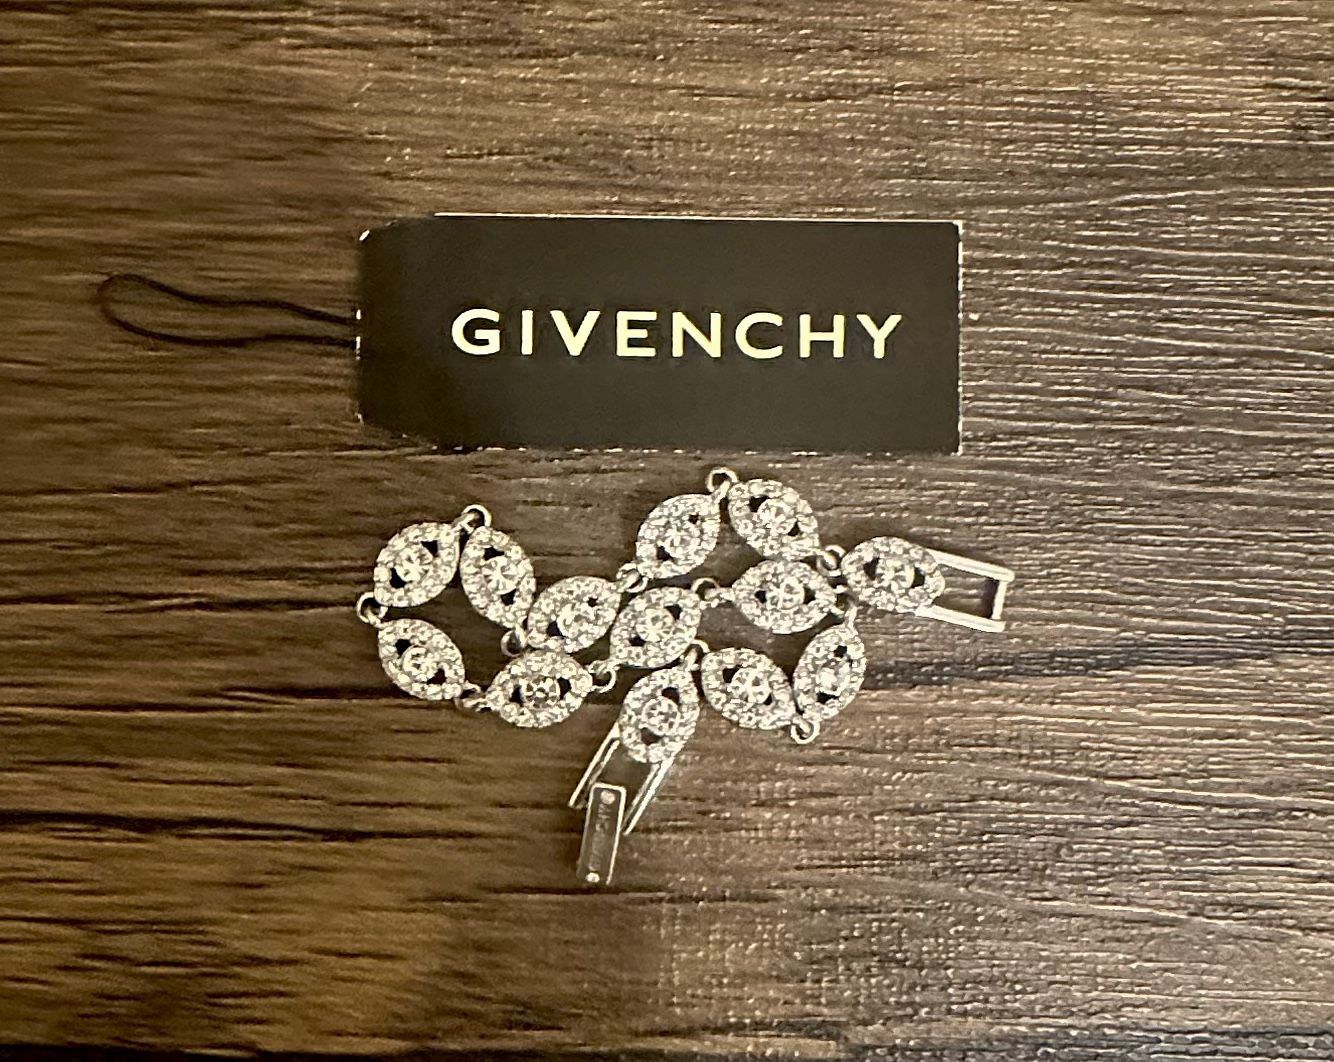 Rhodium Silver-Tone Givenchy Crystal Bracelet